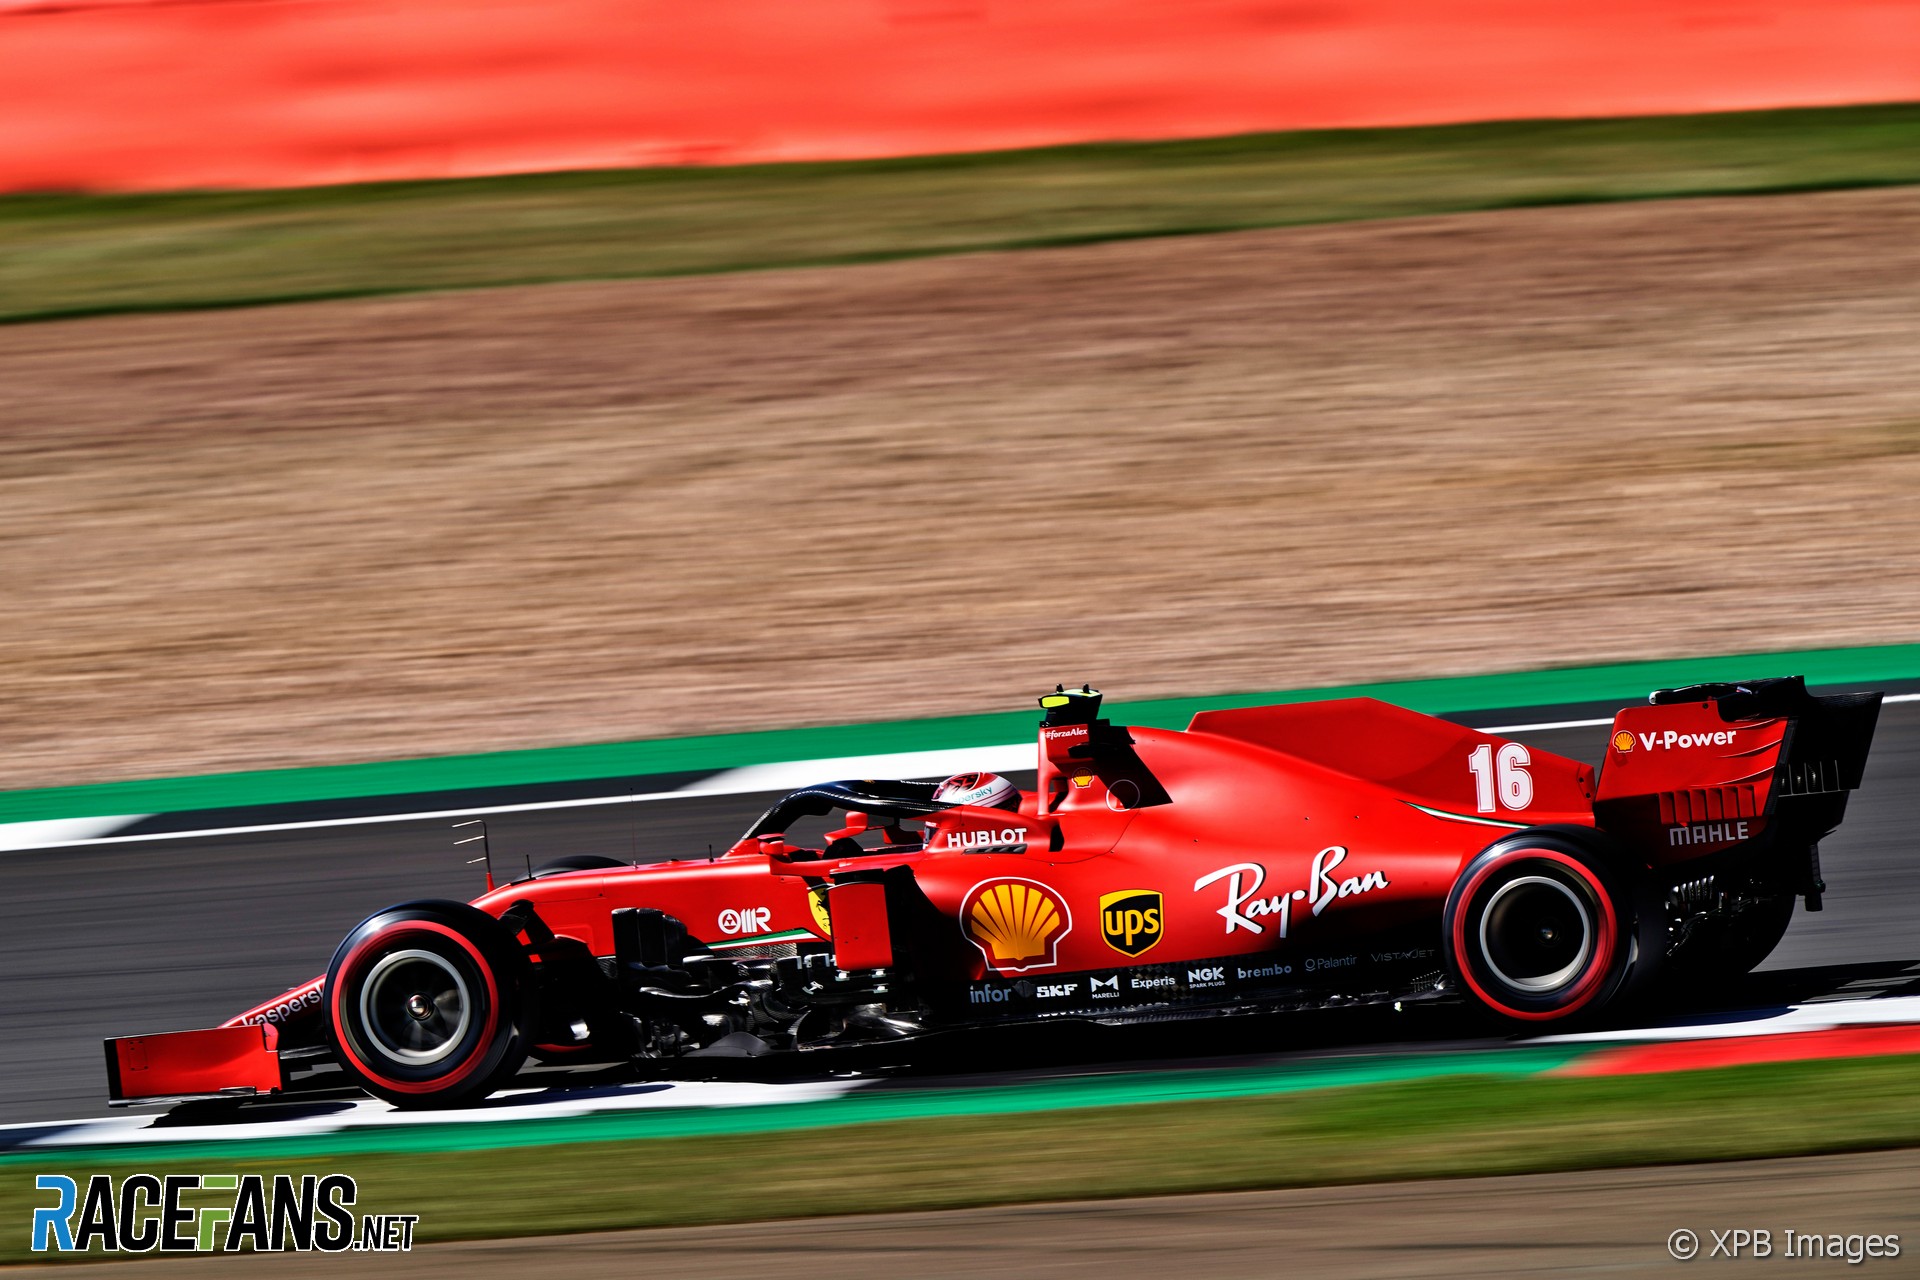 Charles Leclerc, Ferrari, Silverstone, 2020